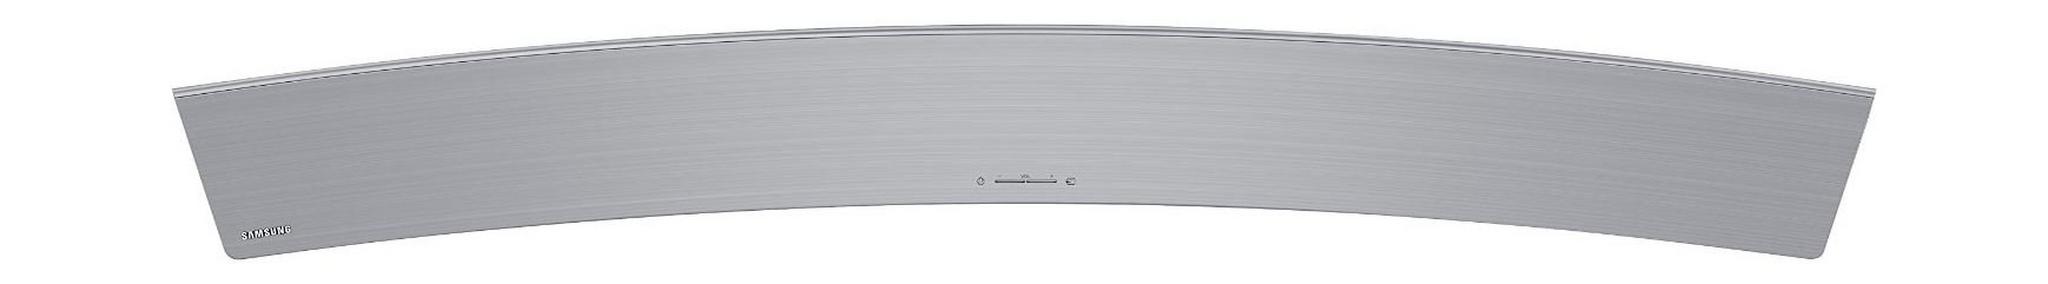 Samsung Curved 8.1 Channel 320 Watt Wireless Audio Soundbar (HW-J7501)